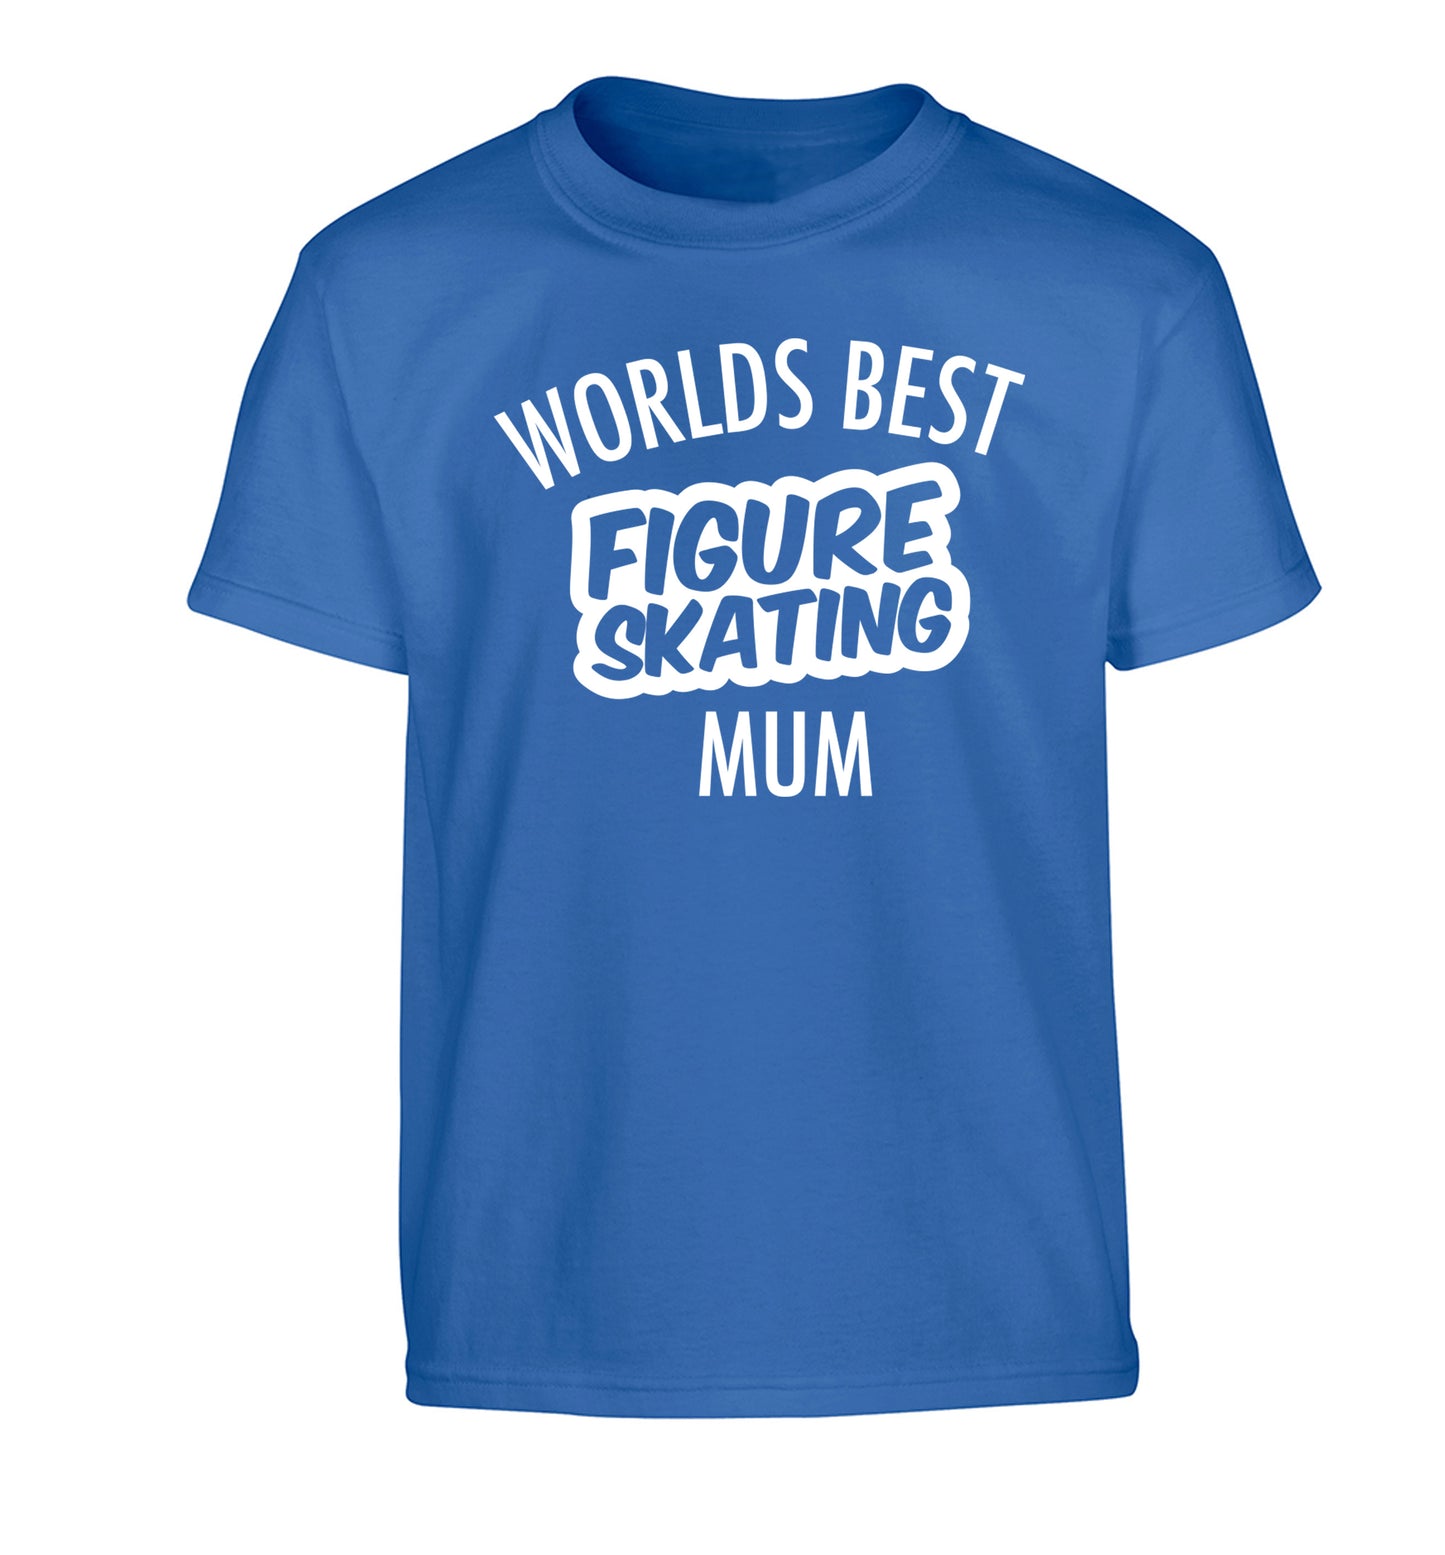 Worlds best figure skating mum Children's blue Tshirt 12-14 Years